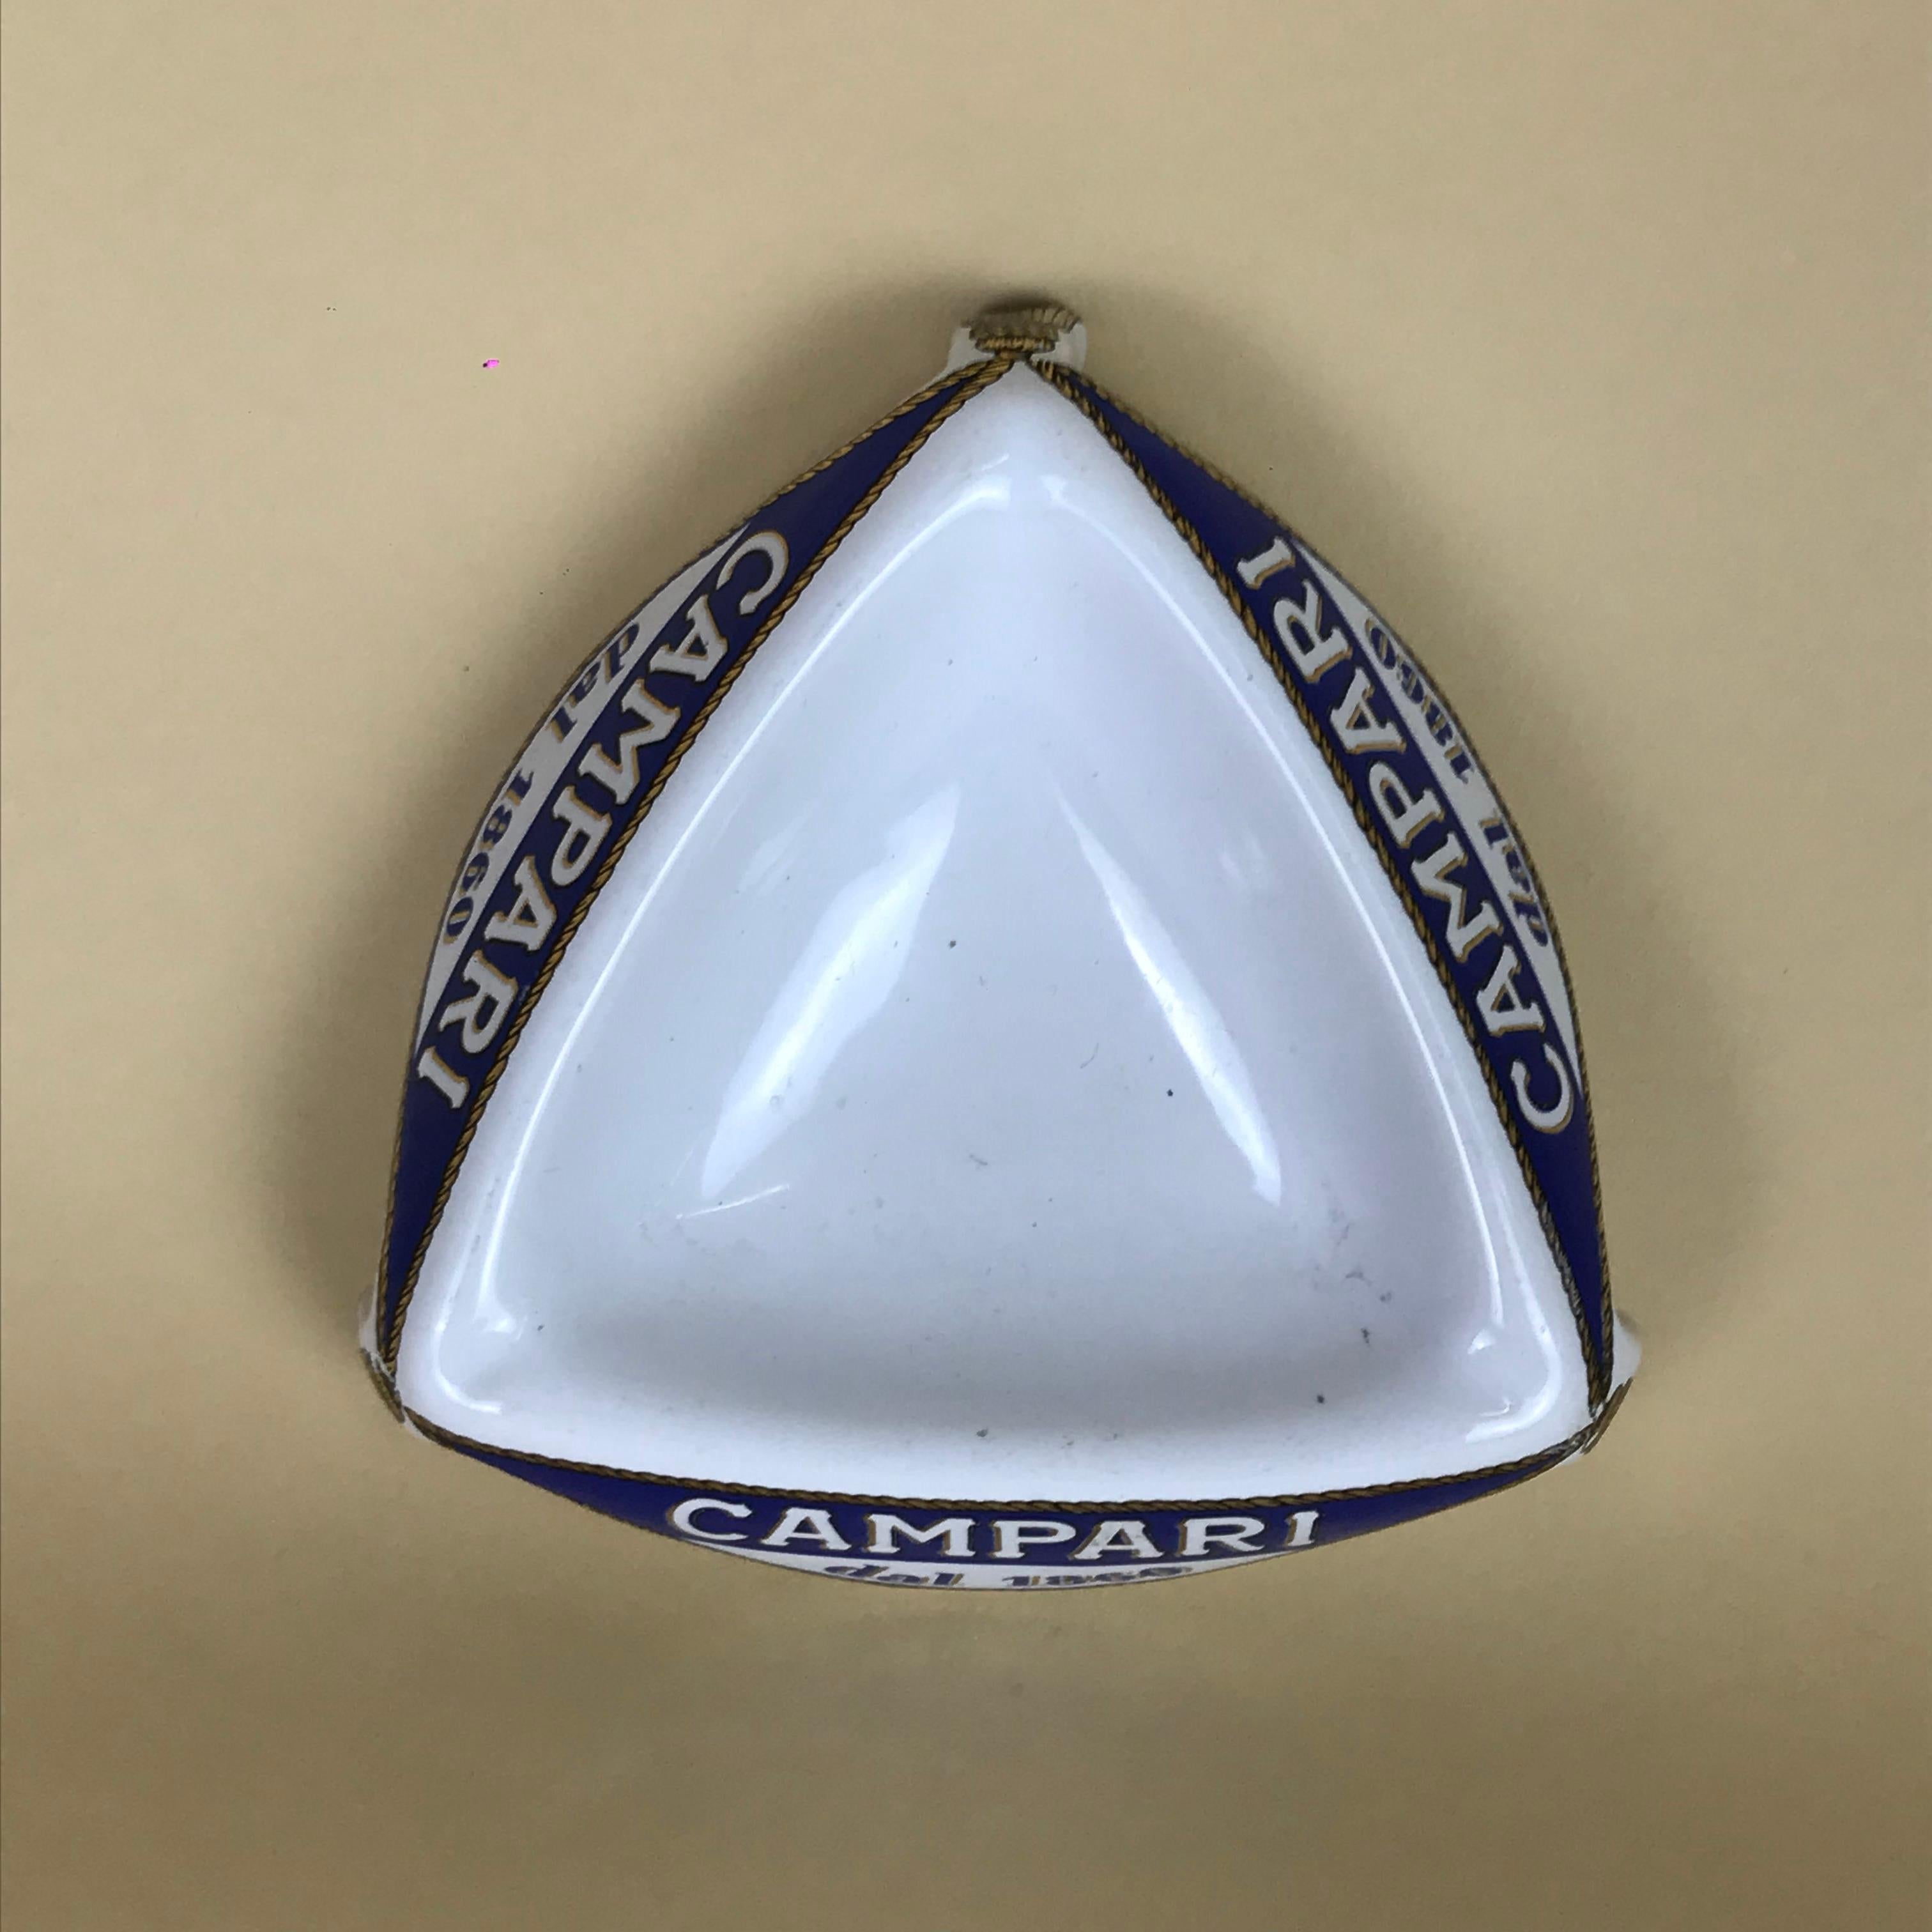 1960s Vintage Advertising Campari Triangular Ashtray Ceramic with Tassels Motif 3